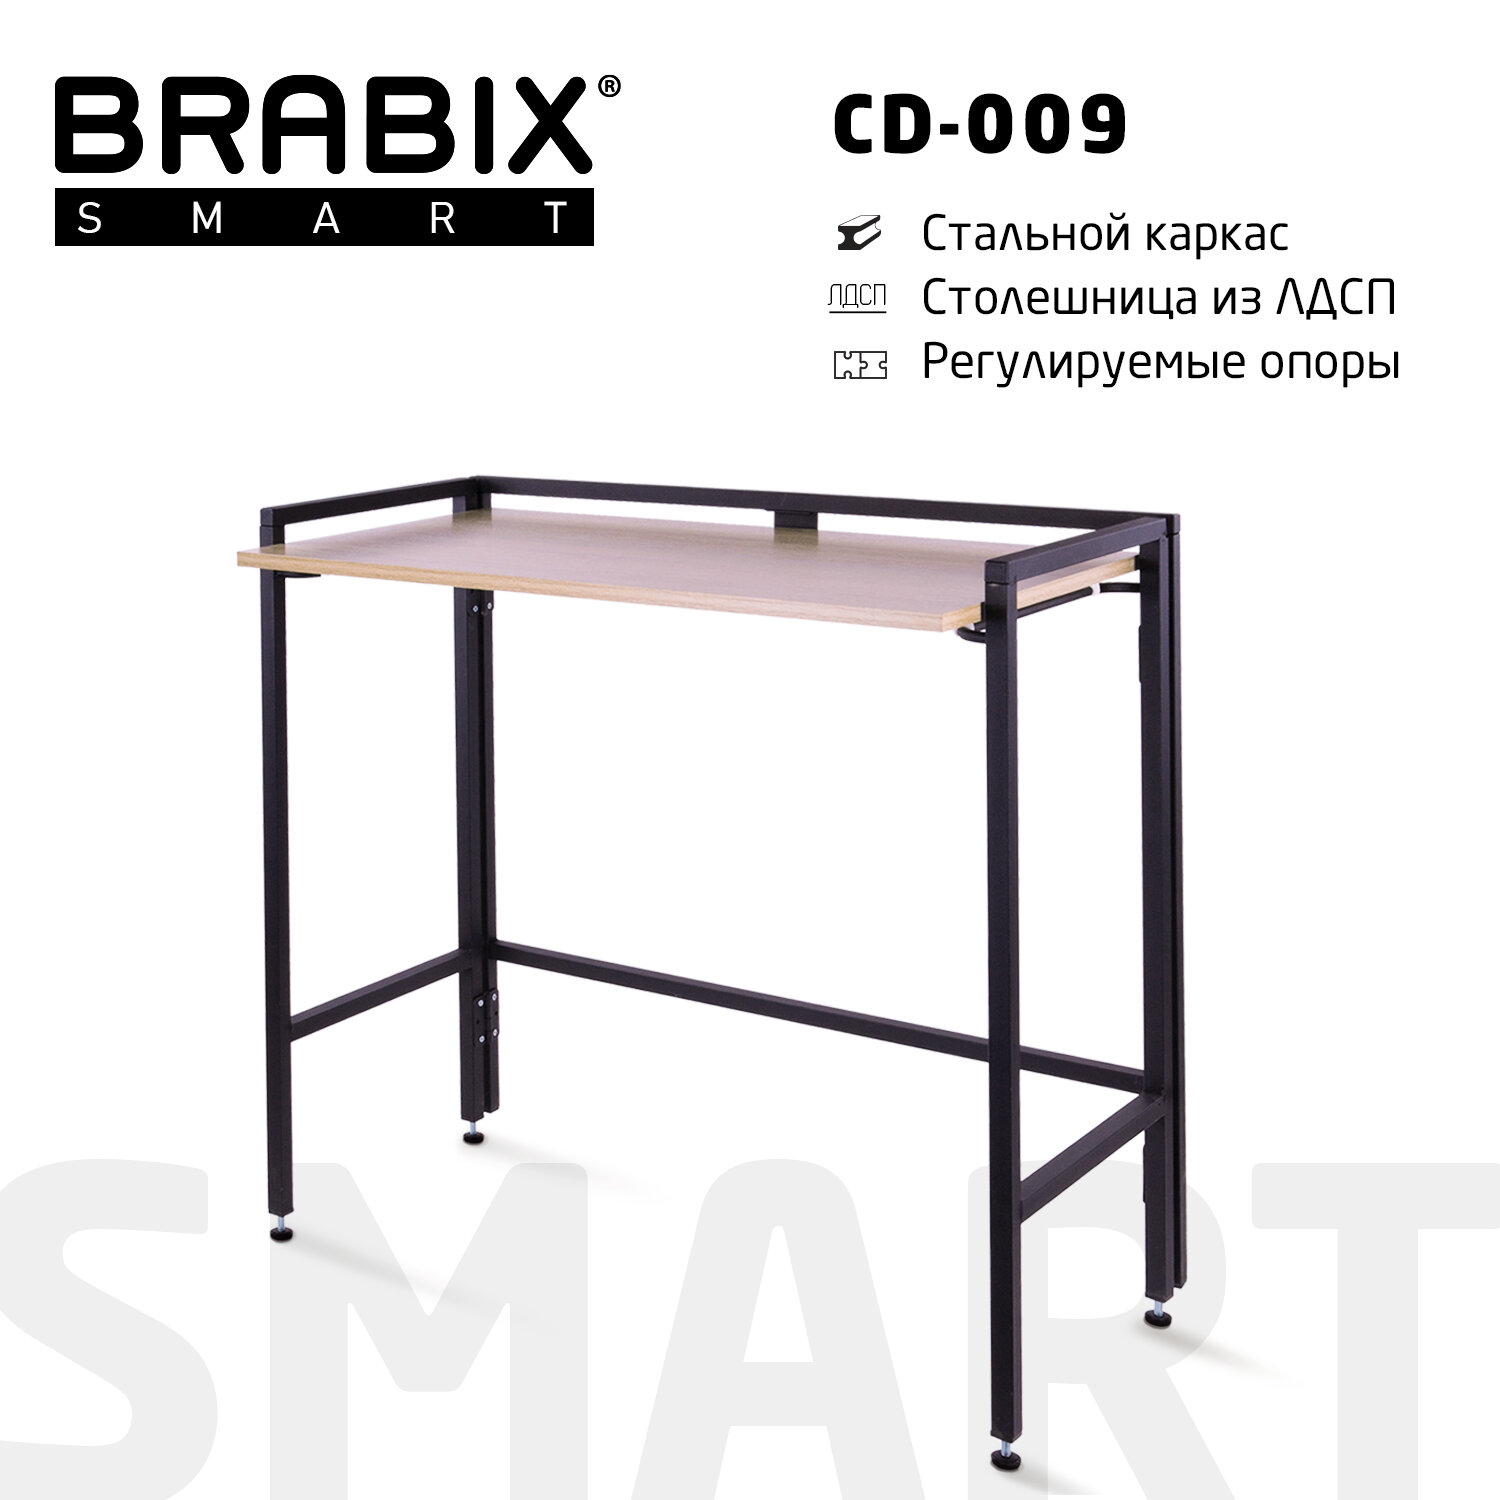 Brabix  BRABIX Smart CD-009 641874